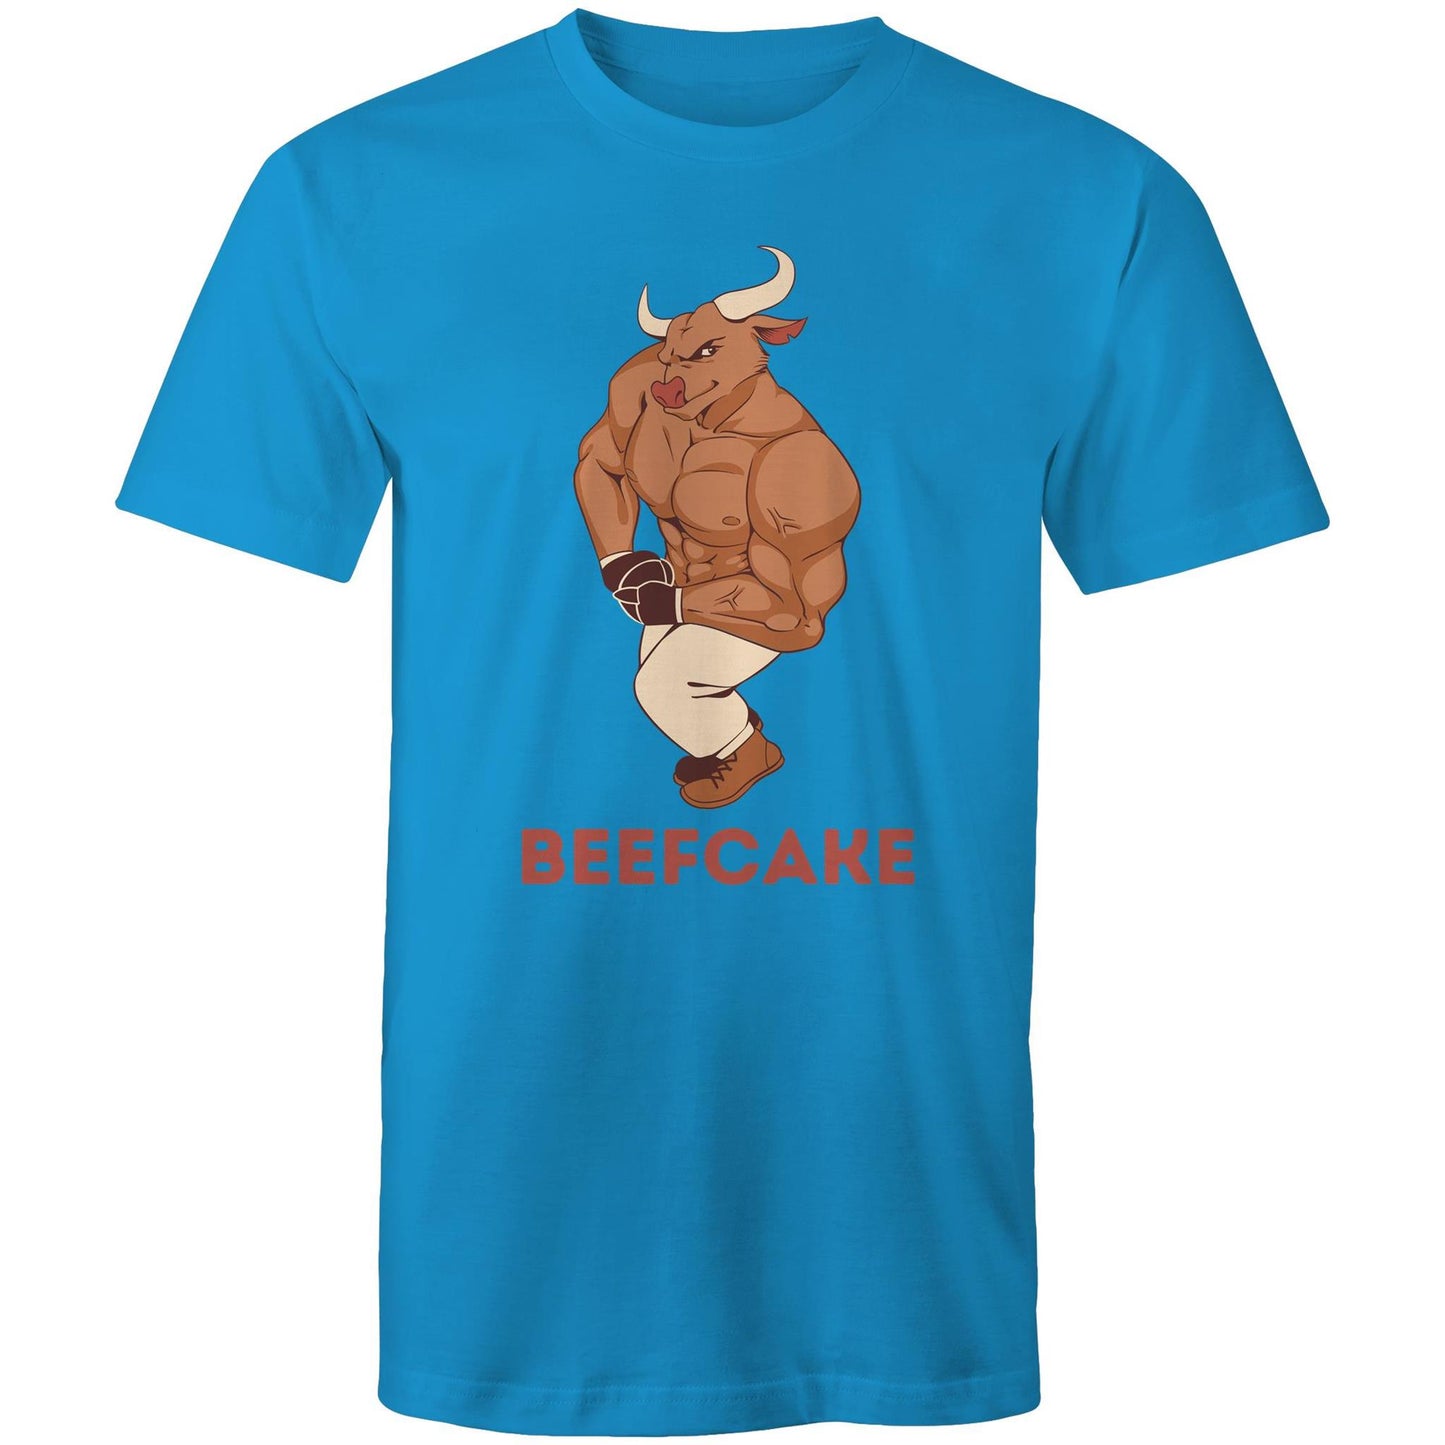 Beefcake, Bull, Gym - Mens T-Shirt Arctic Blue Fitness T-shirt Fitness